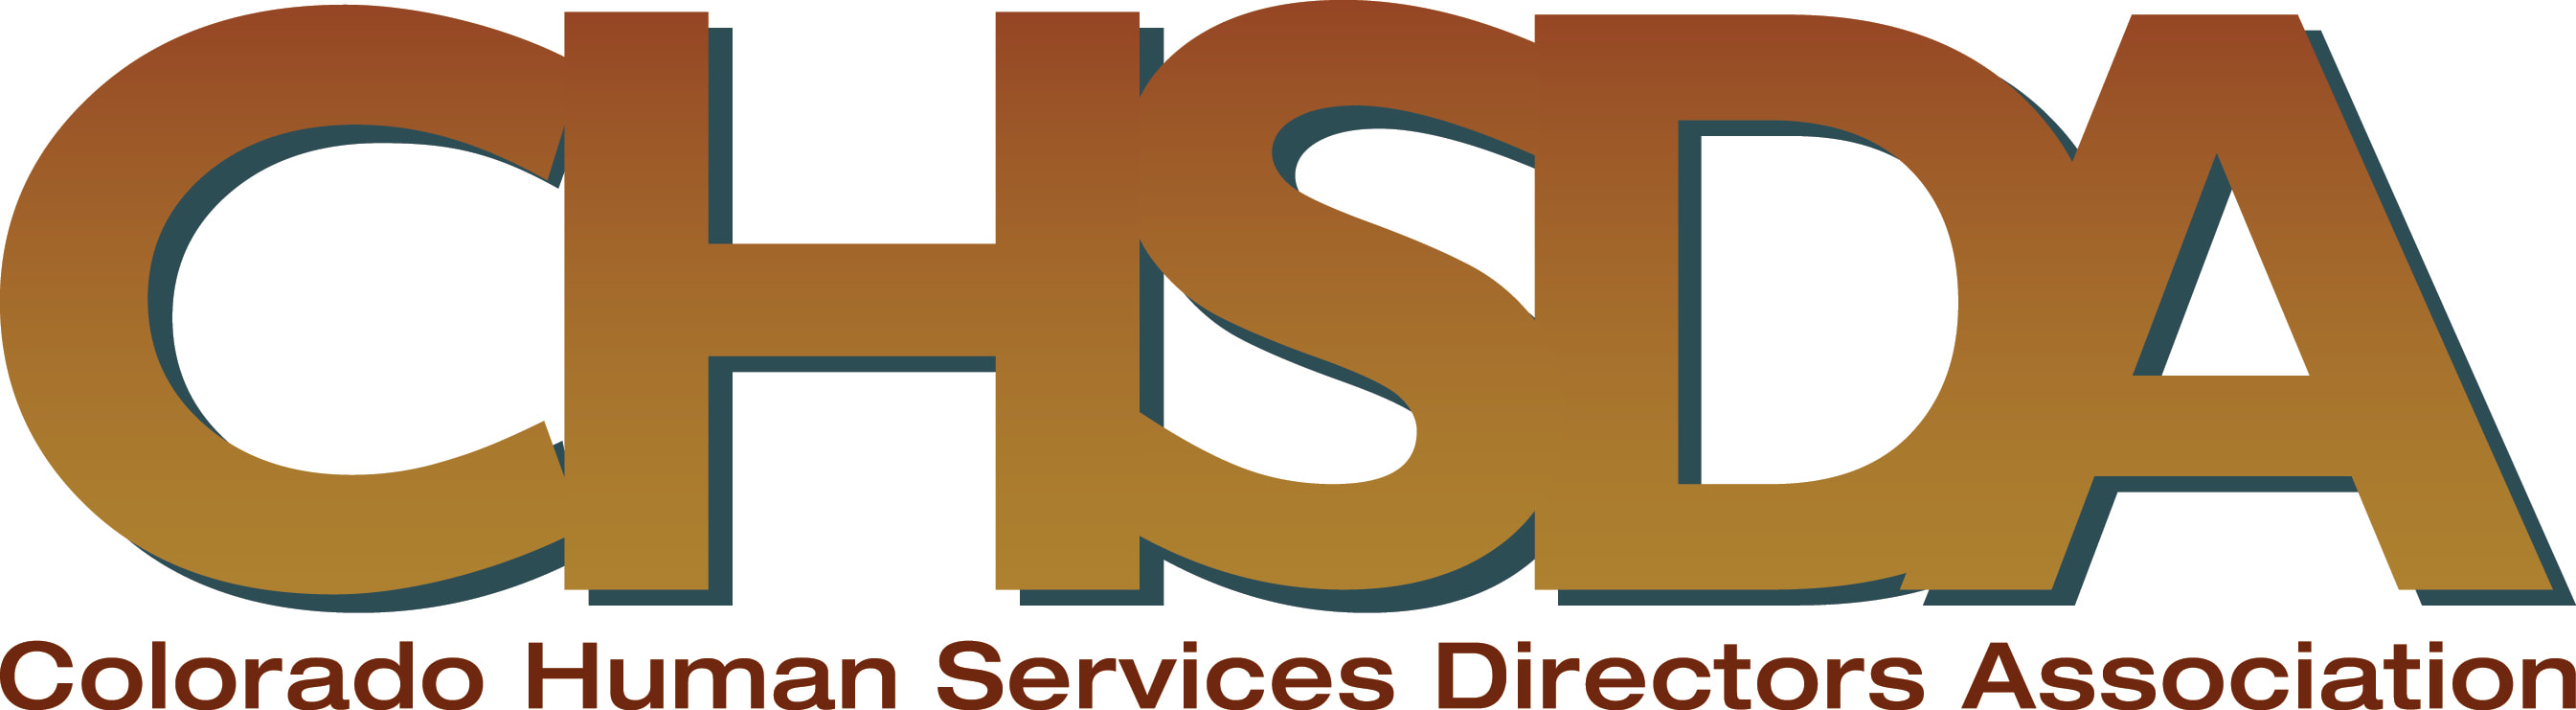 CHSDA (Colorado Human Services Directors Association)